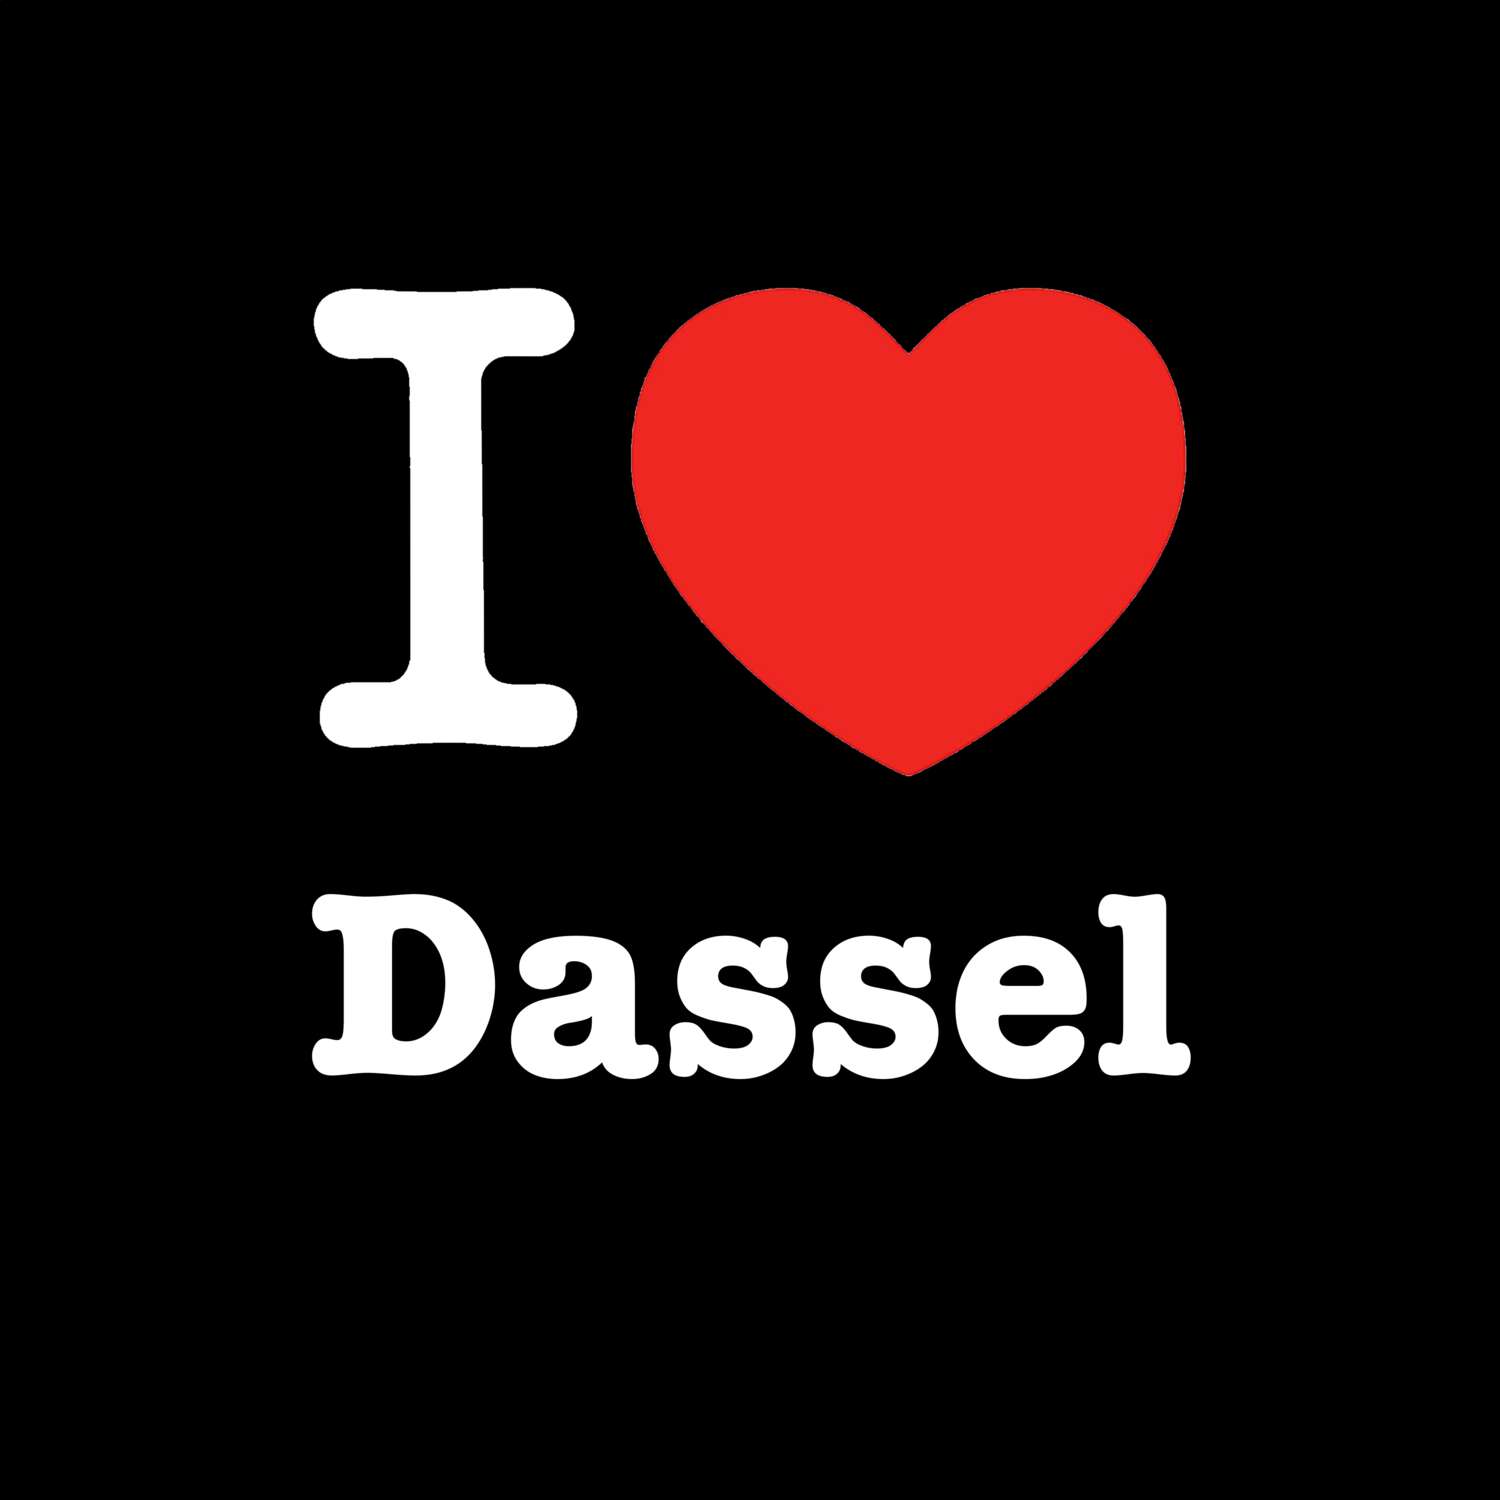 Dassel T-Shirt »I love«